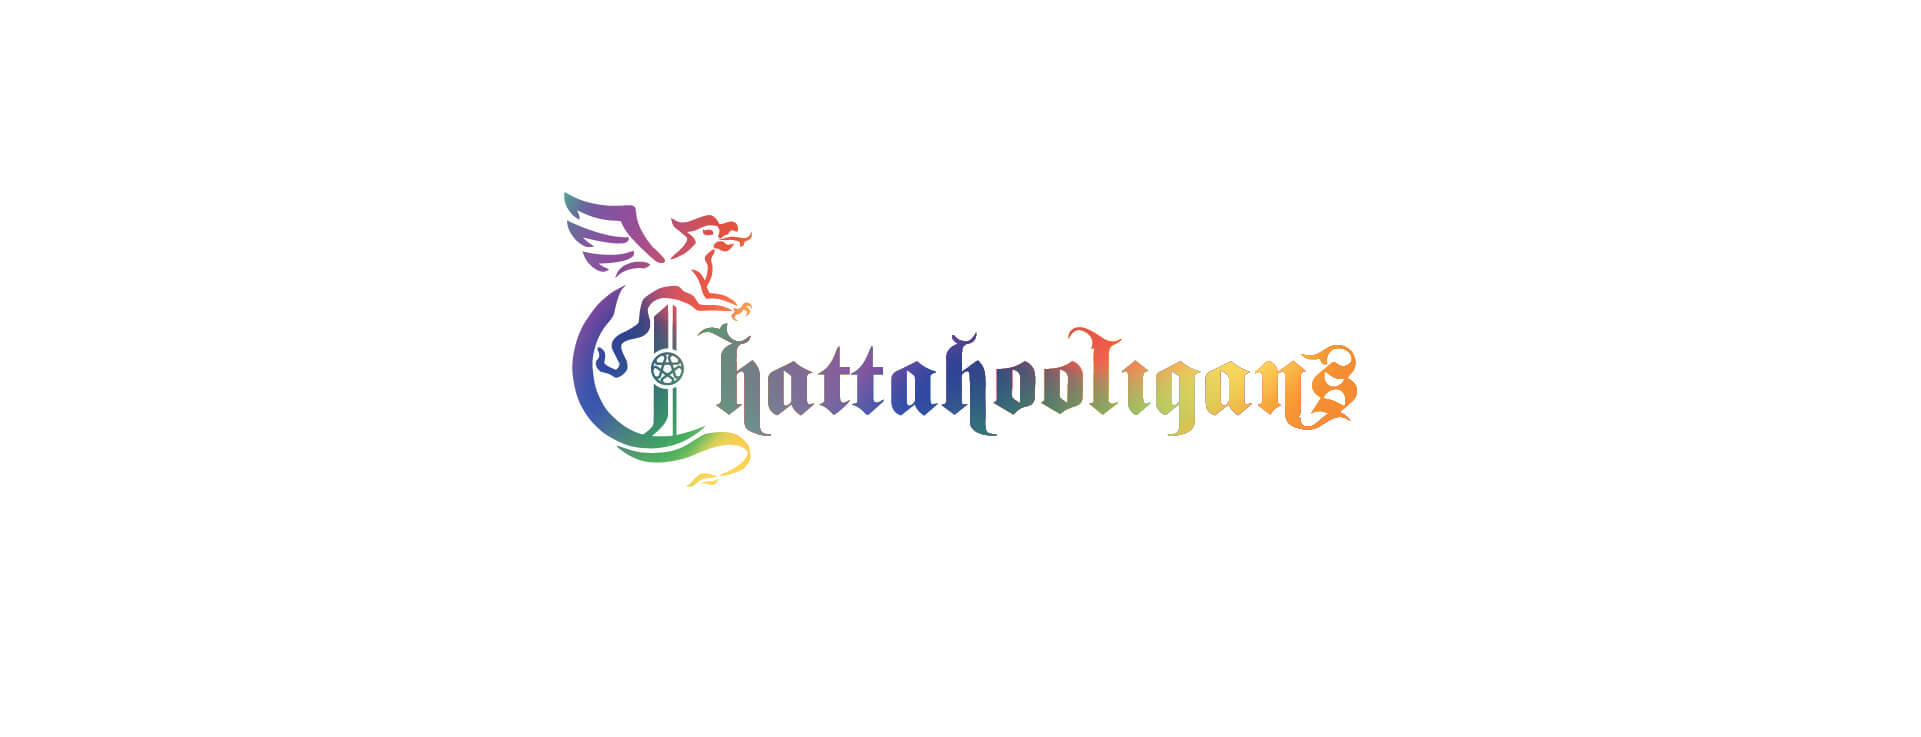 Chattahooligans tenth aniversary wordmark for Pride Month